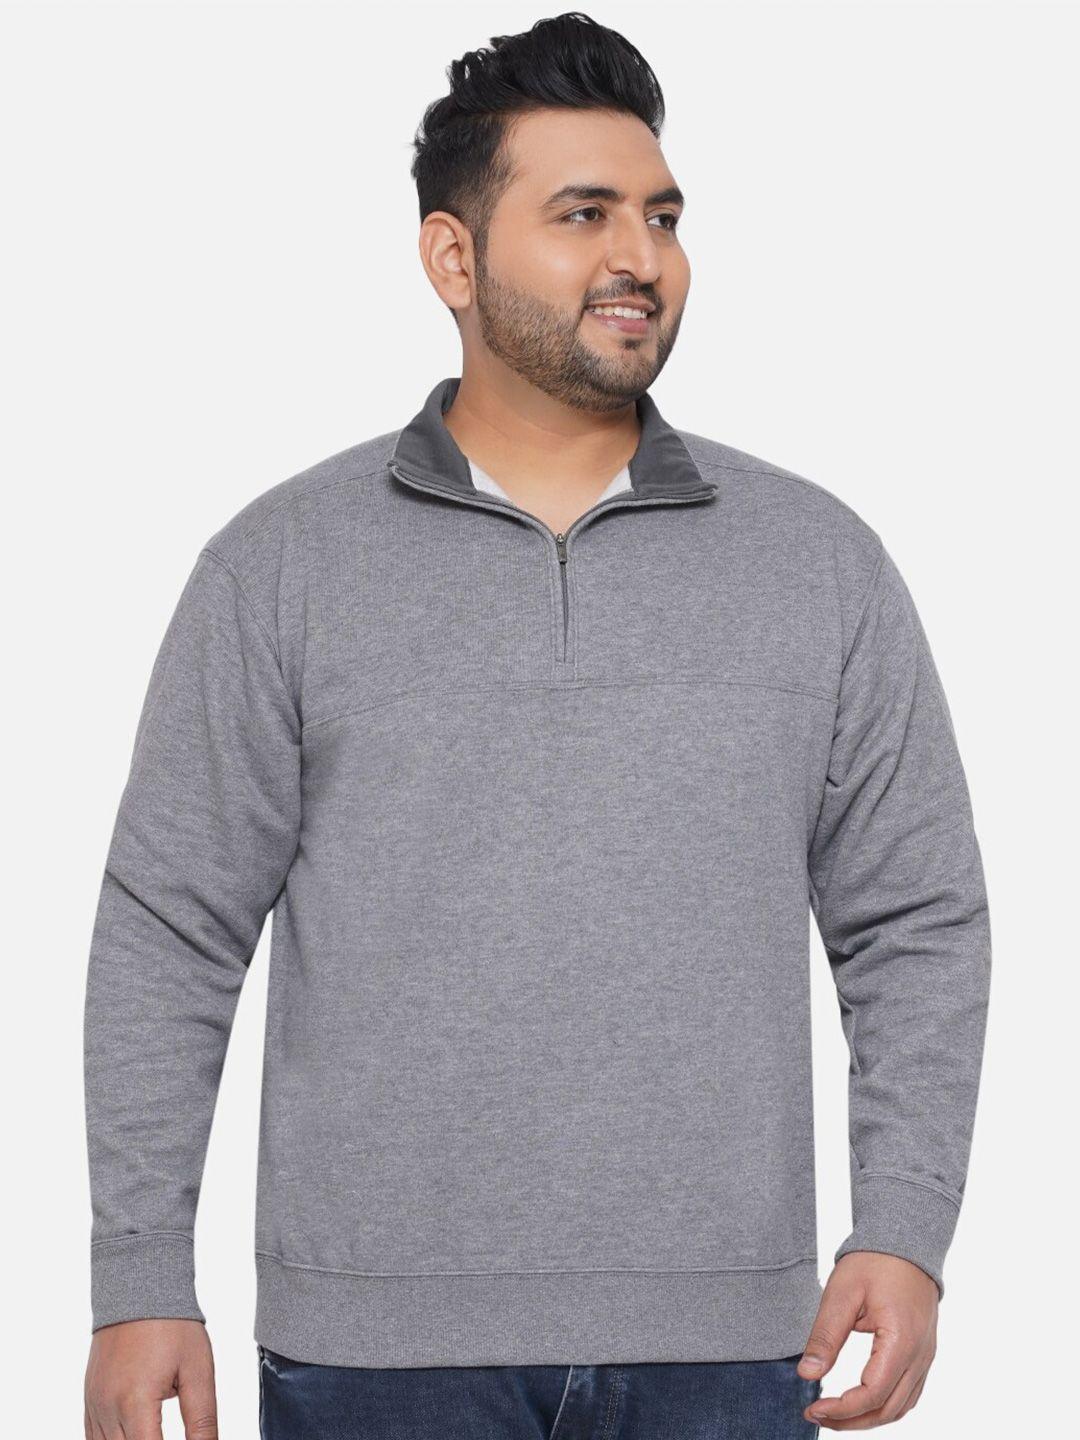 santonio mock collar pure cotton sweatshirt